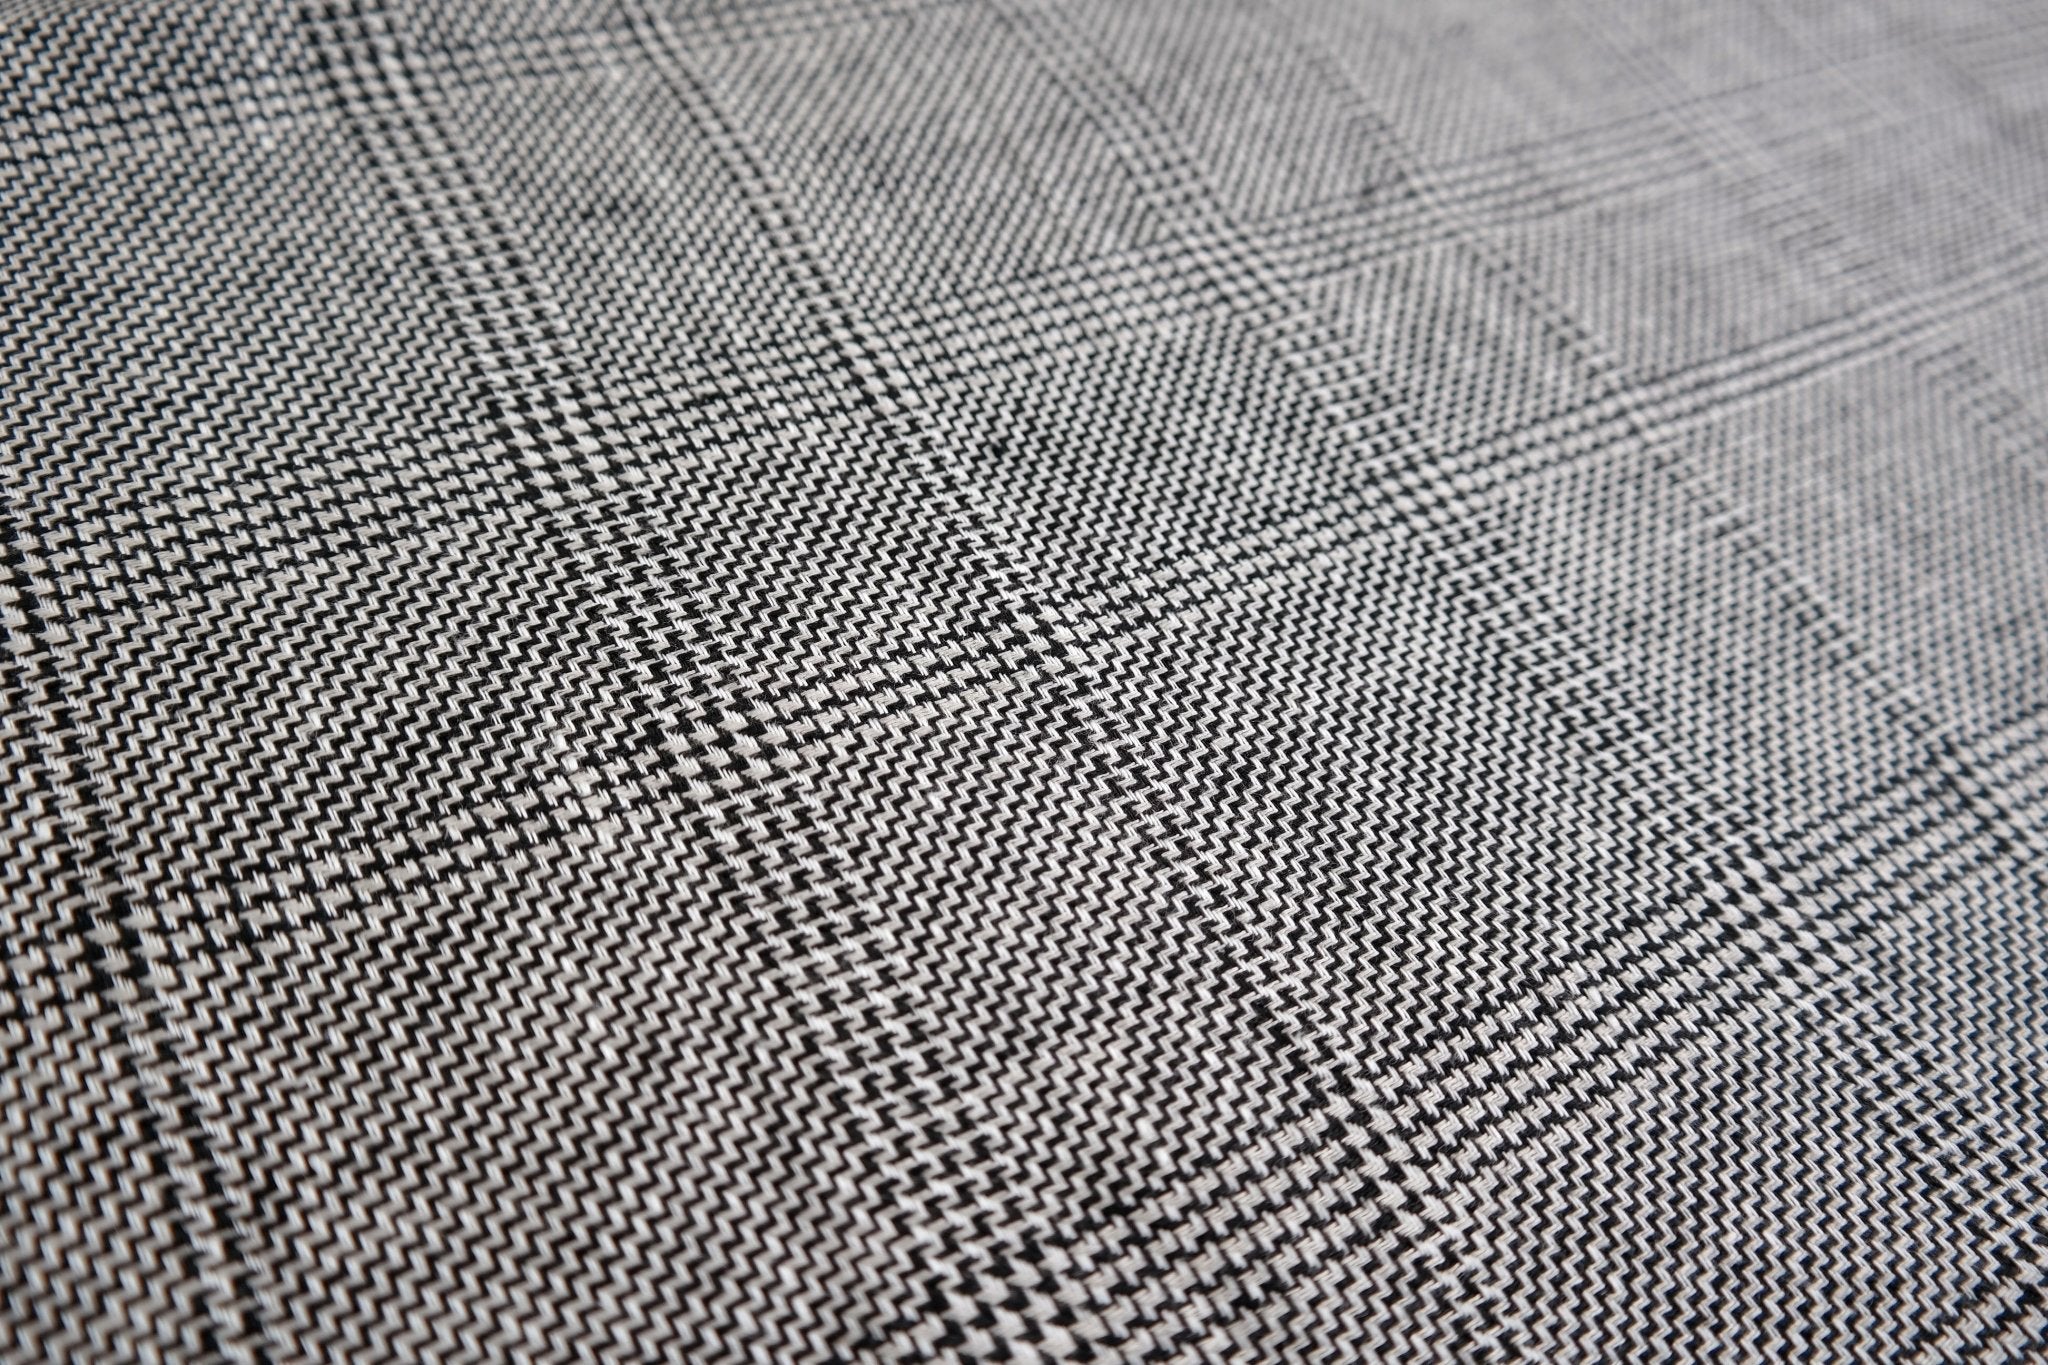 100% Linen Fabric Natural Black Windowpane Plaid Twill Medium Weight - The Linen Lab - Grey